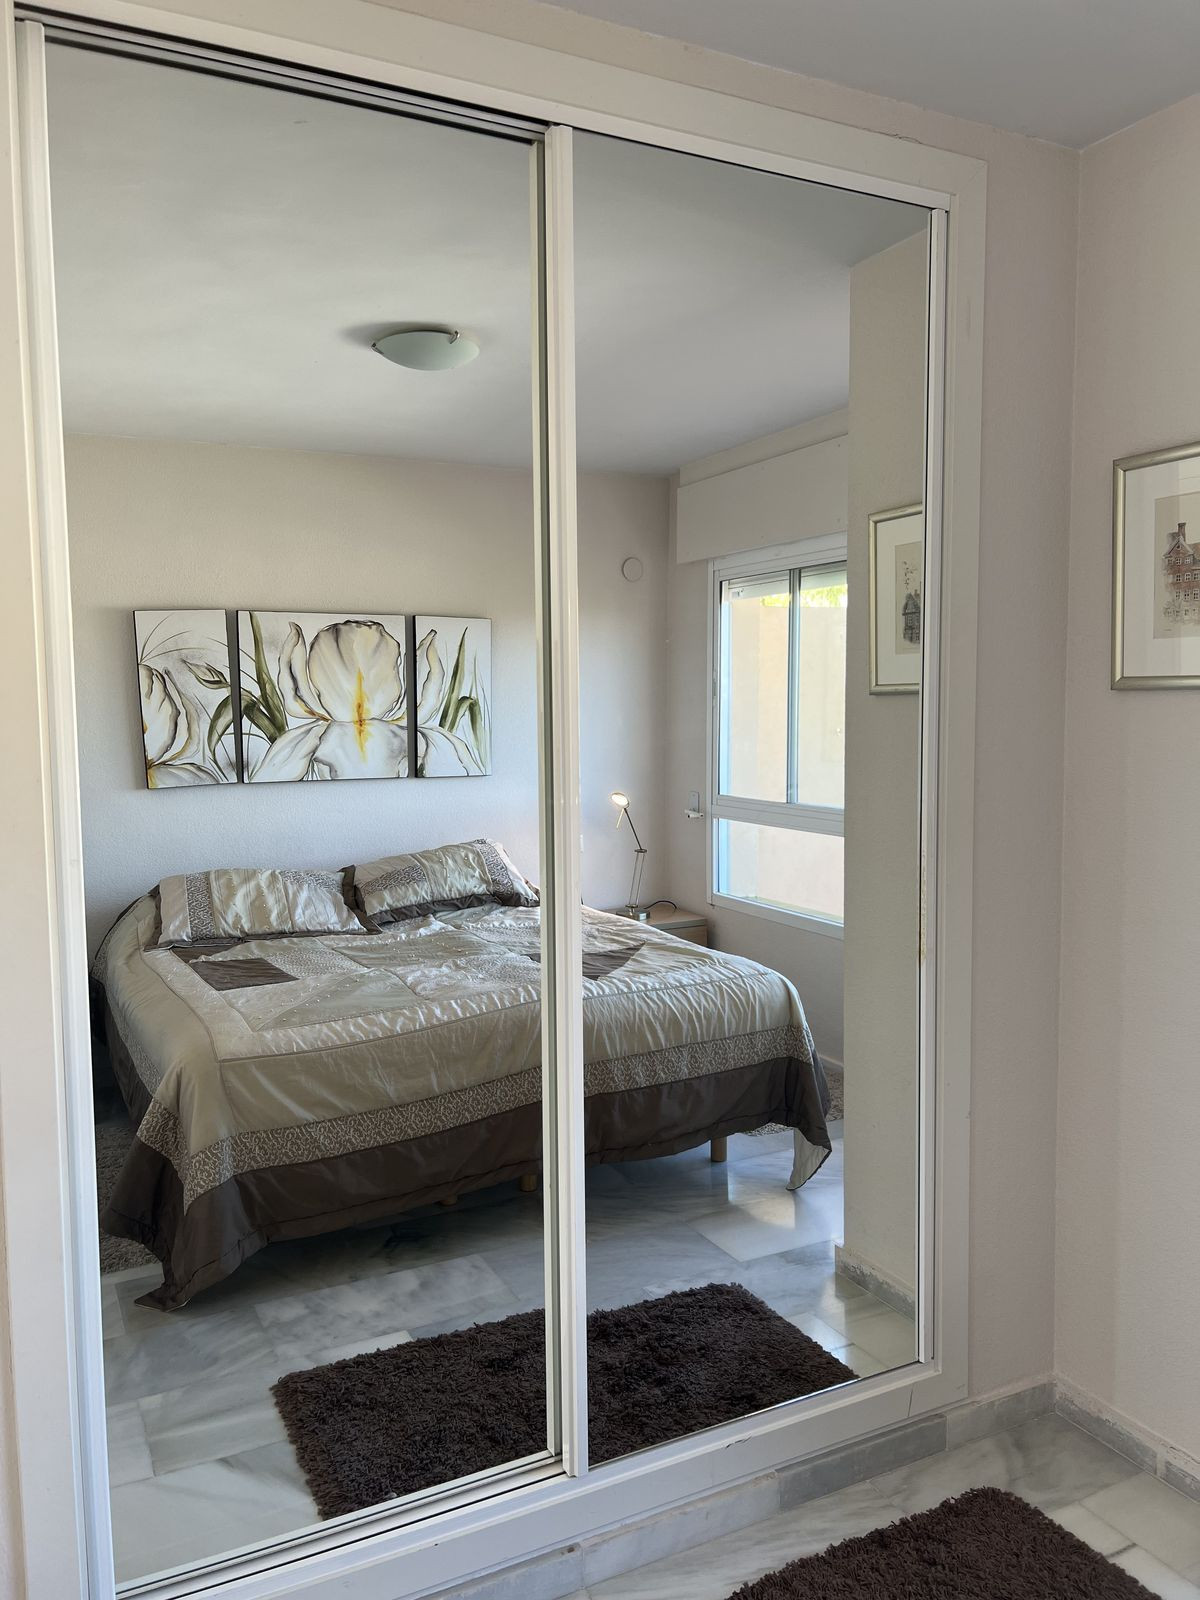 3 bedroom Apartment For Sale in Riviera del Sol, Málaga - thumb 21